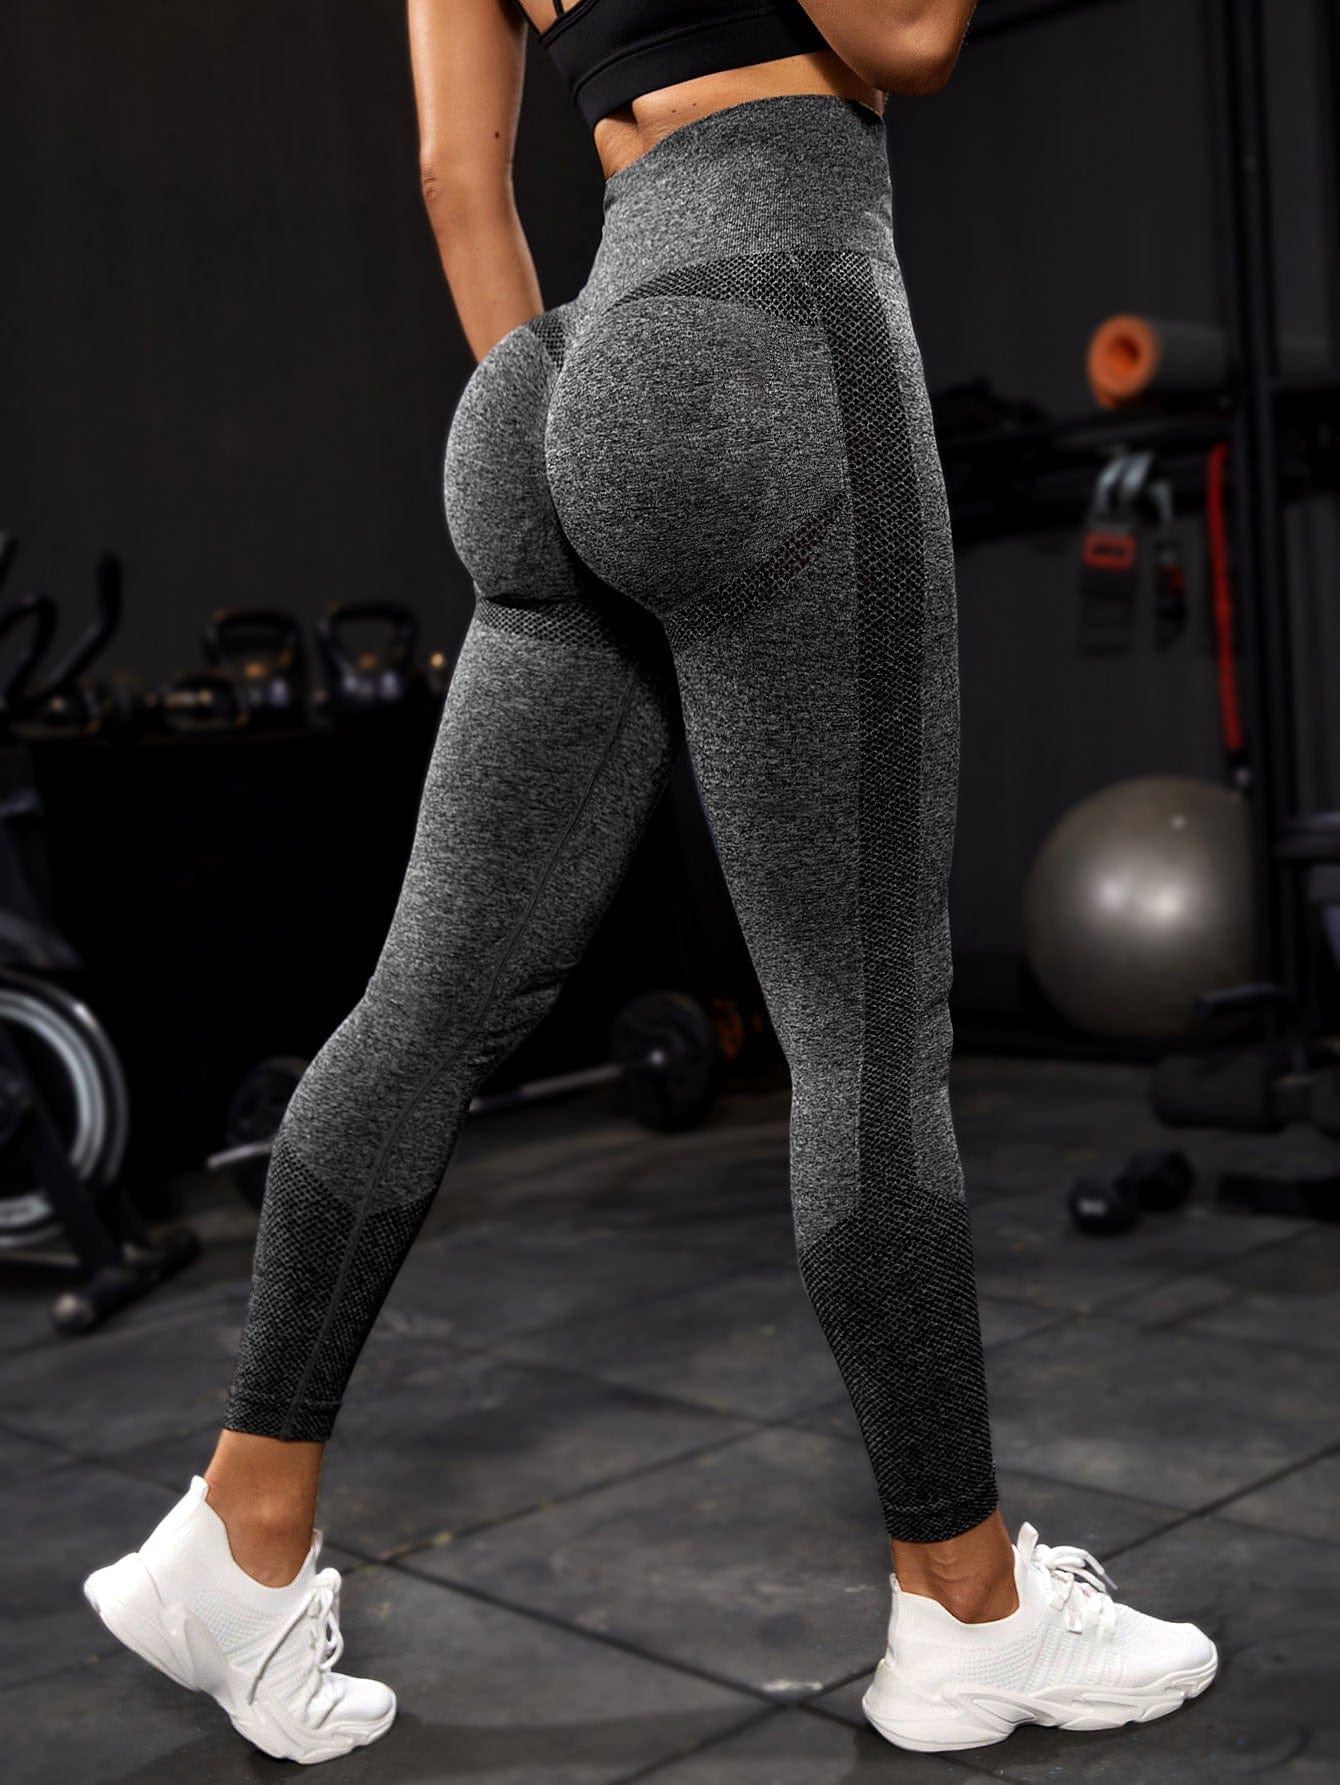 Yoga Sport Women Fitness Seamless Workout Leggings Fashion Push Up Leggings Gym Women Pants